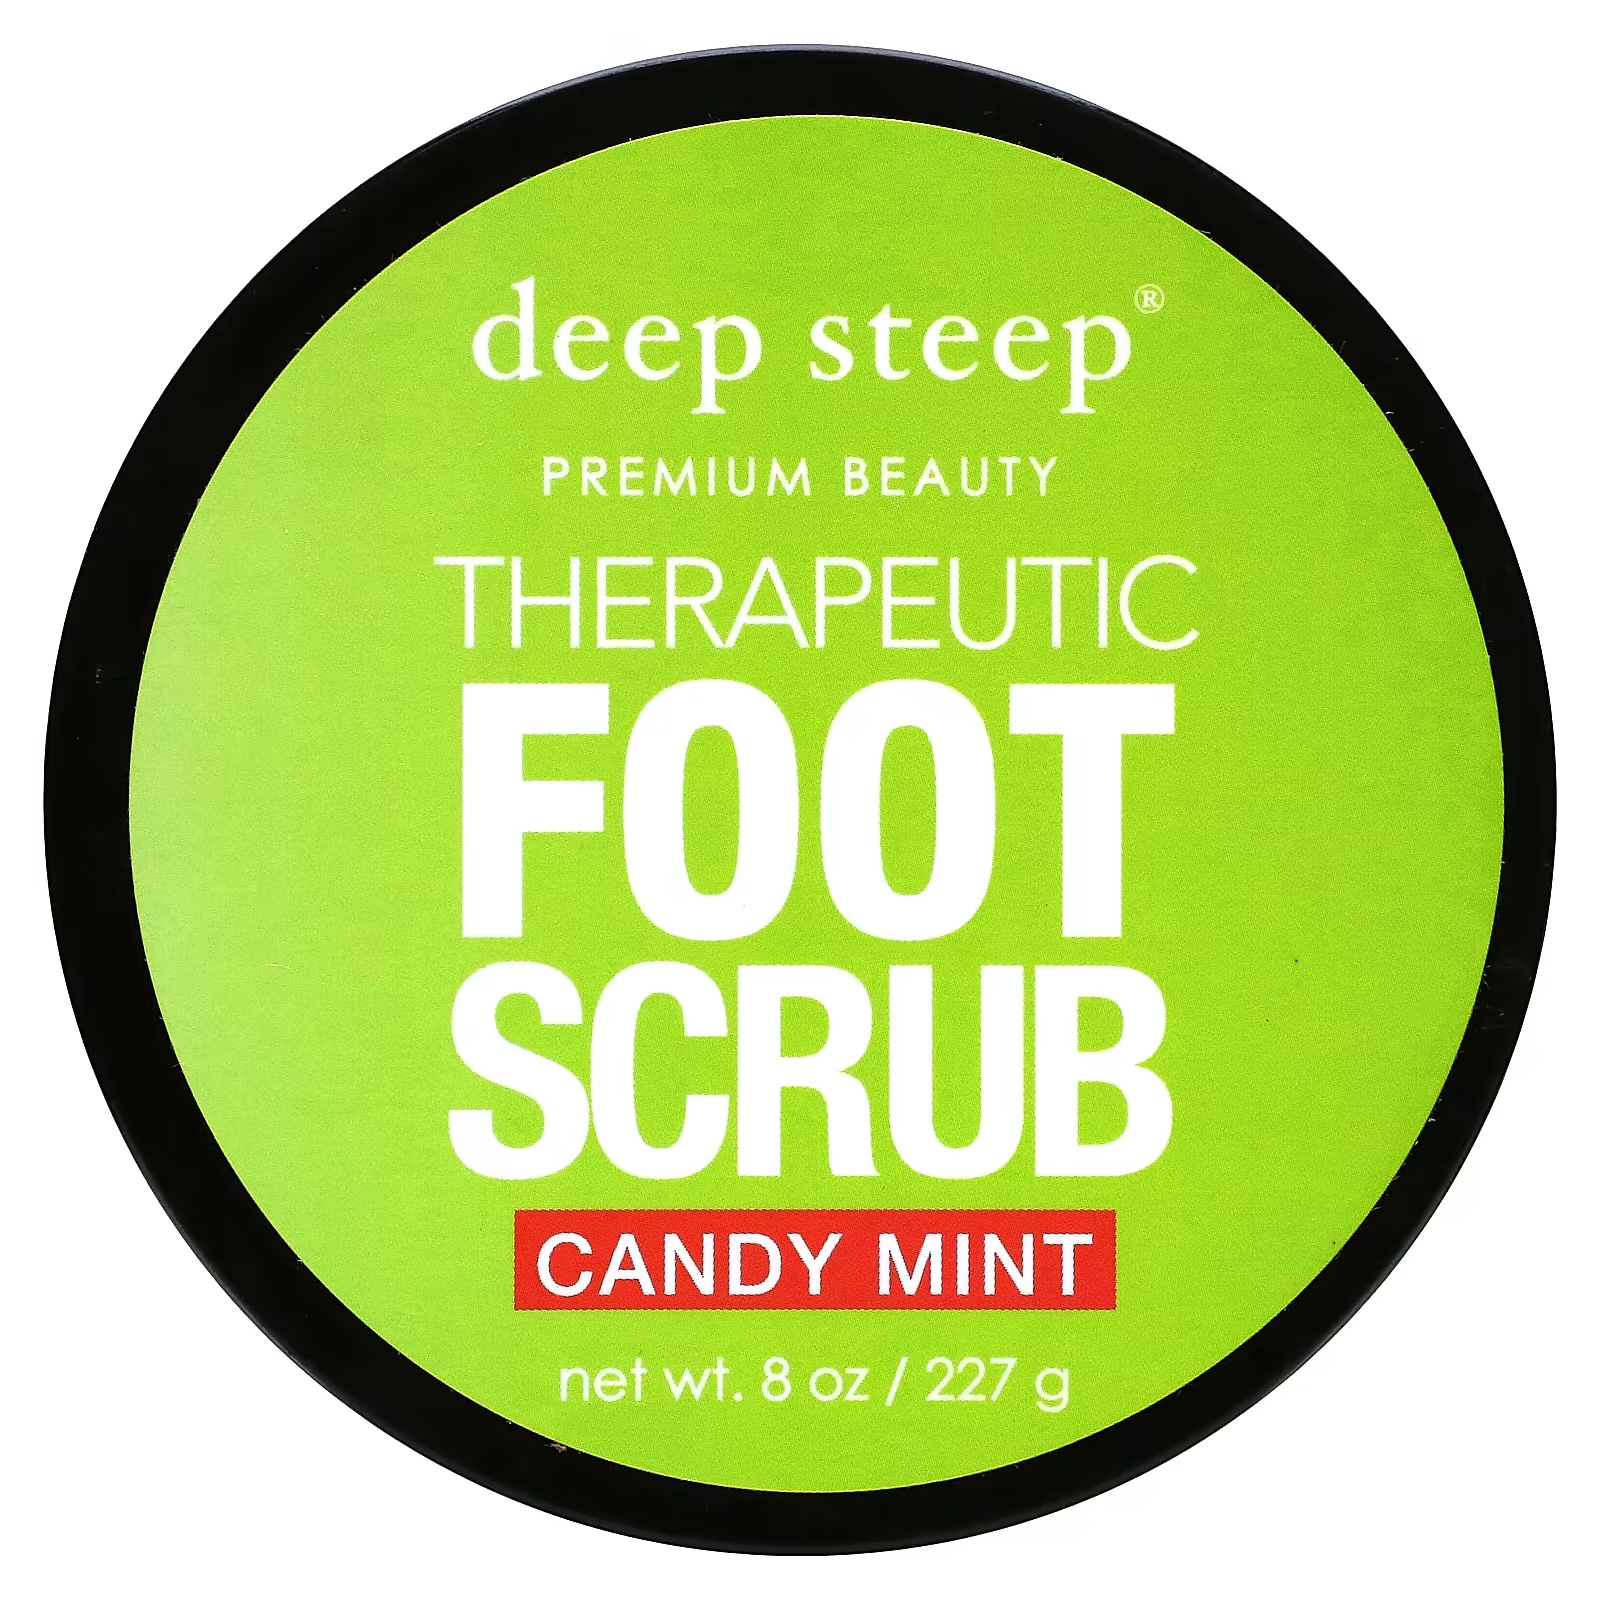 Лечебный скраб для ног Deep Steep Candy Mint, 227 г скраб для ног терапевтический deep steep therapeutic foot scrub candy mint 226 г